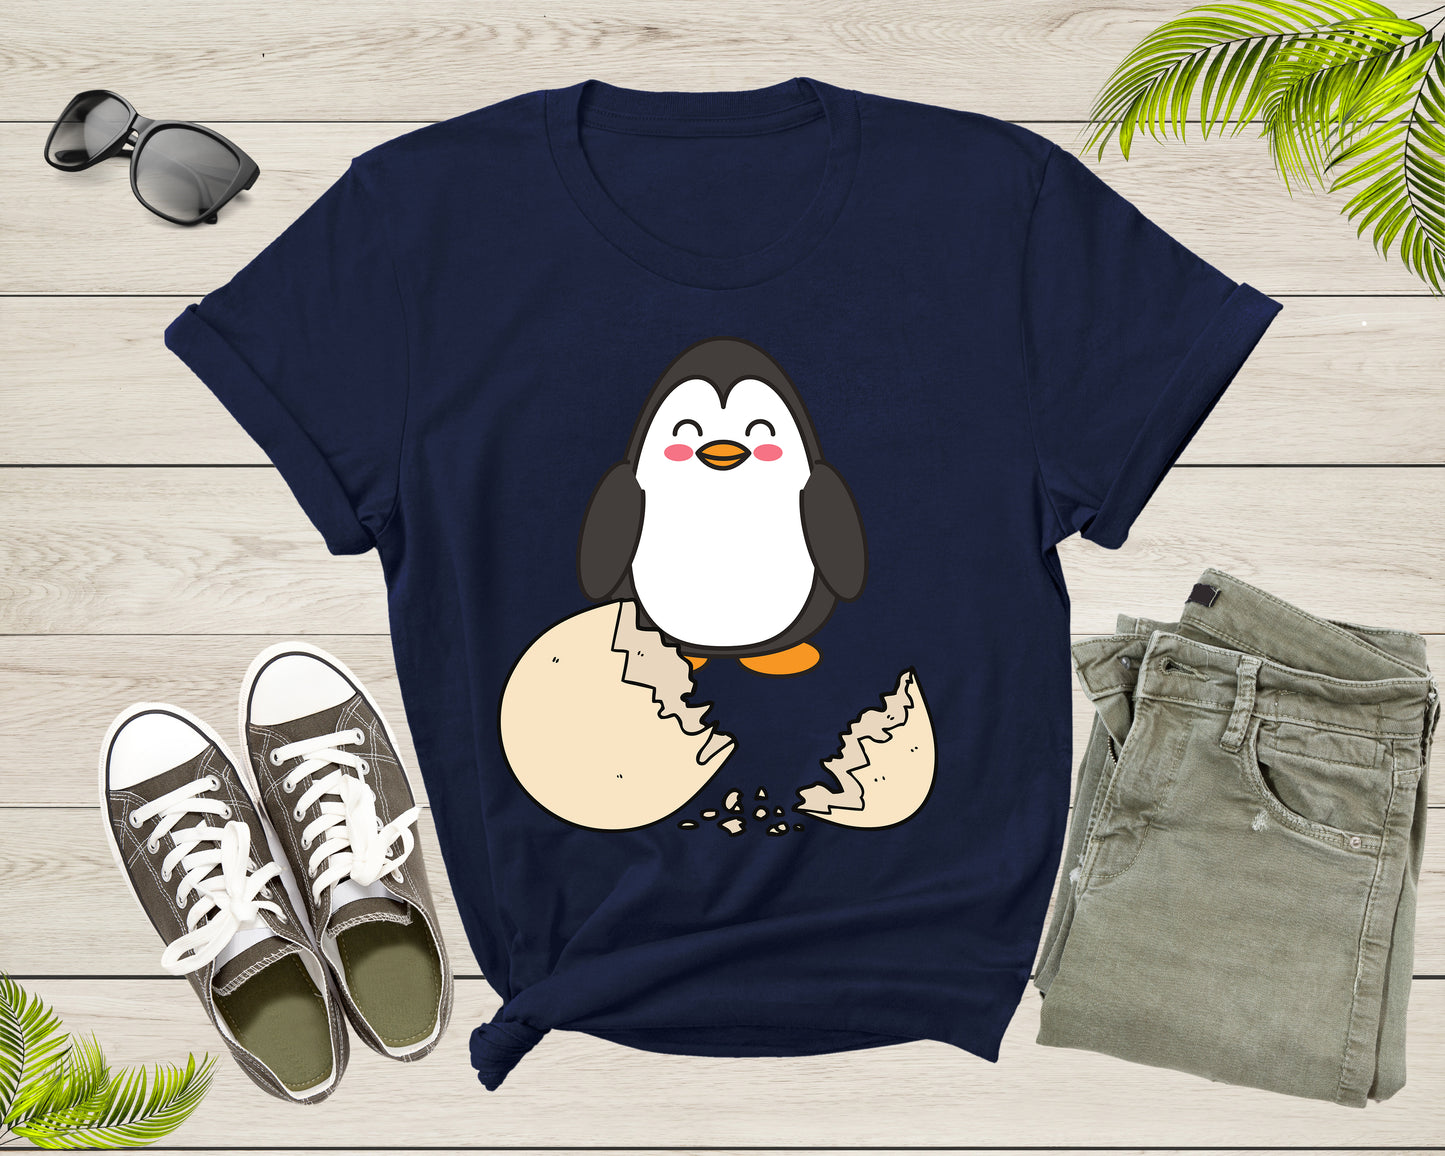 Cute Funny Penguin Hatched Egg Cutie Animal Adorable Sweet T-Shirt Penguin Lover Gift T Shirt for Men Women Kids Boys Girls Graphic Tshirt